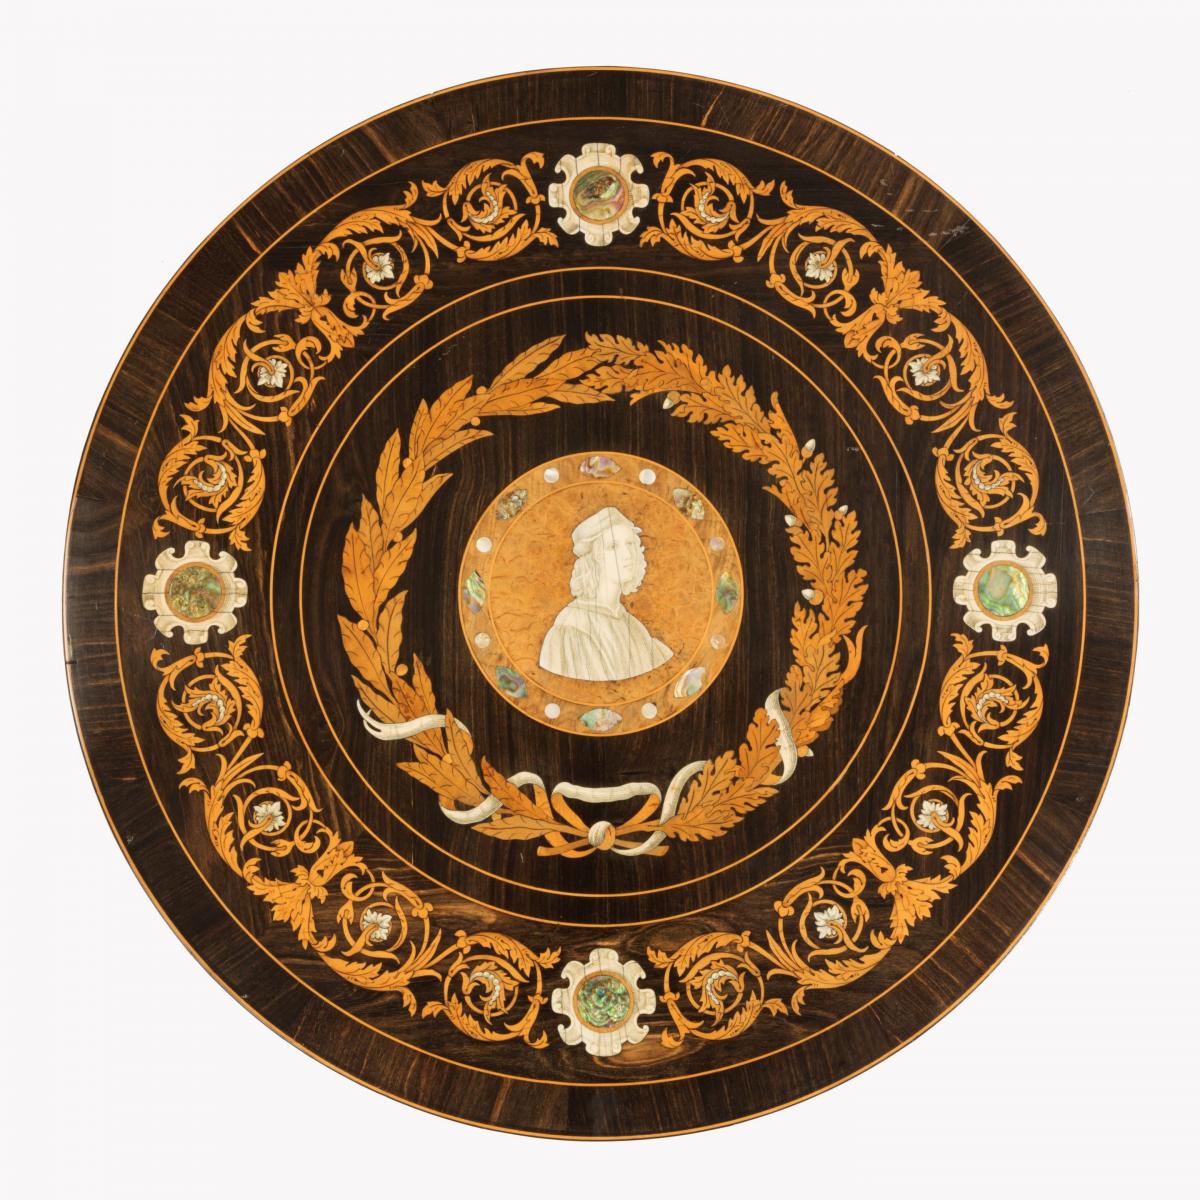 Decorative intarsia roundel in the Renaissance style